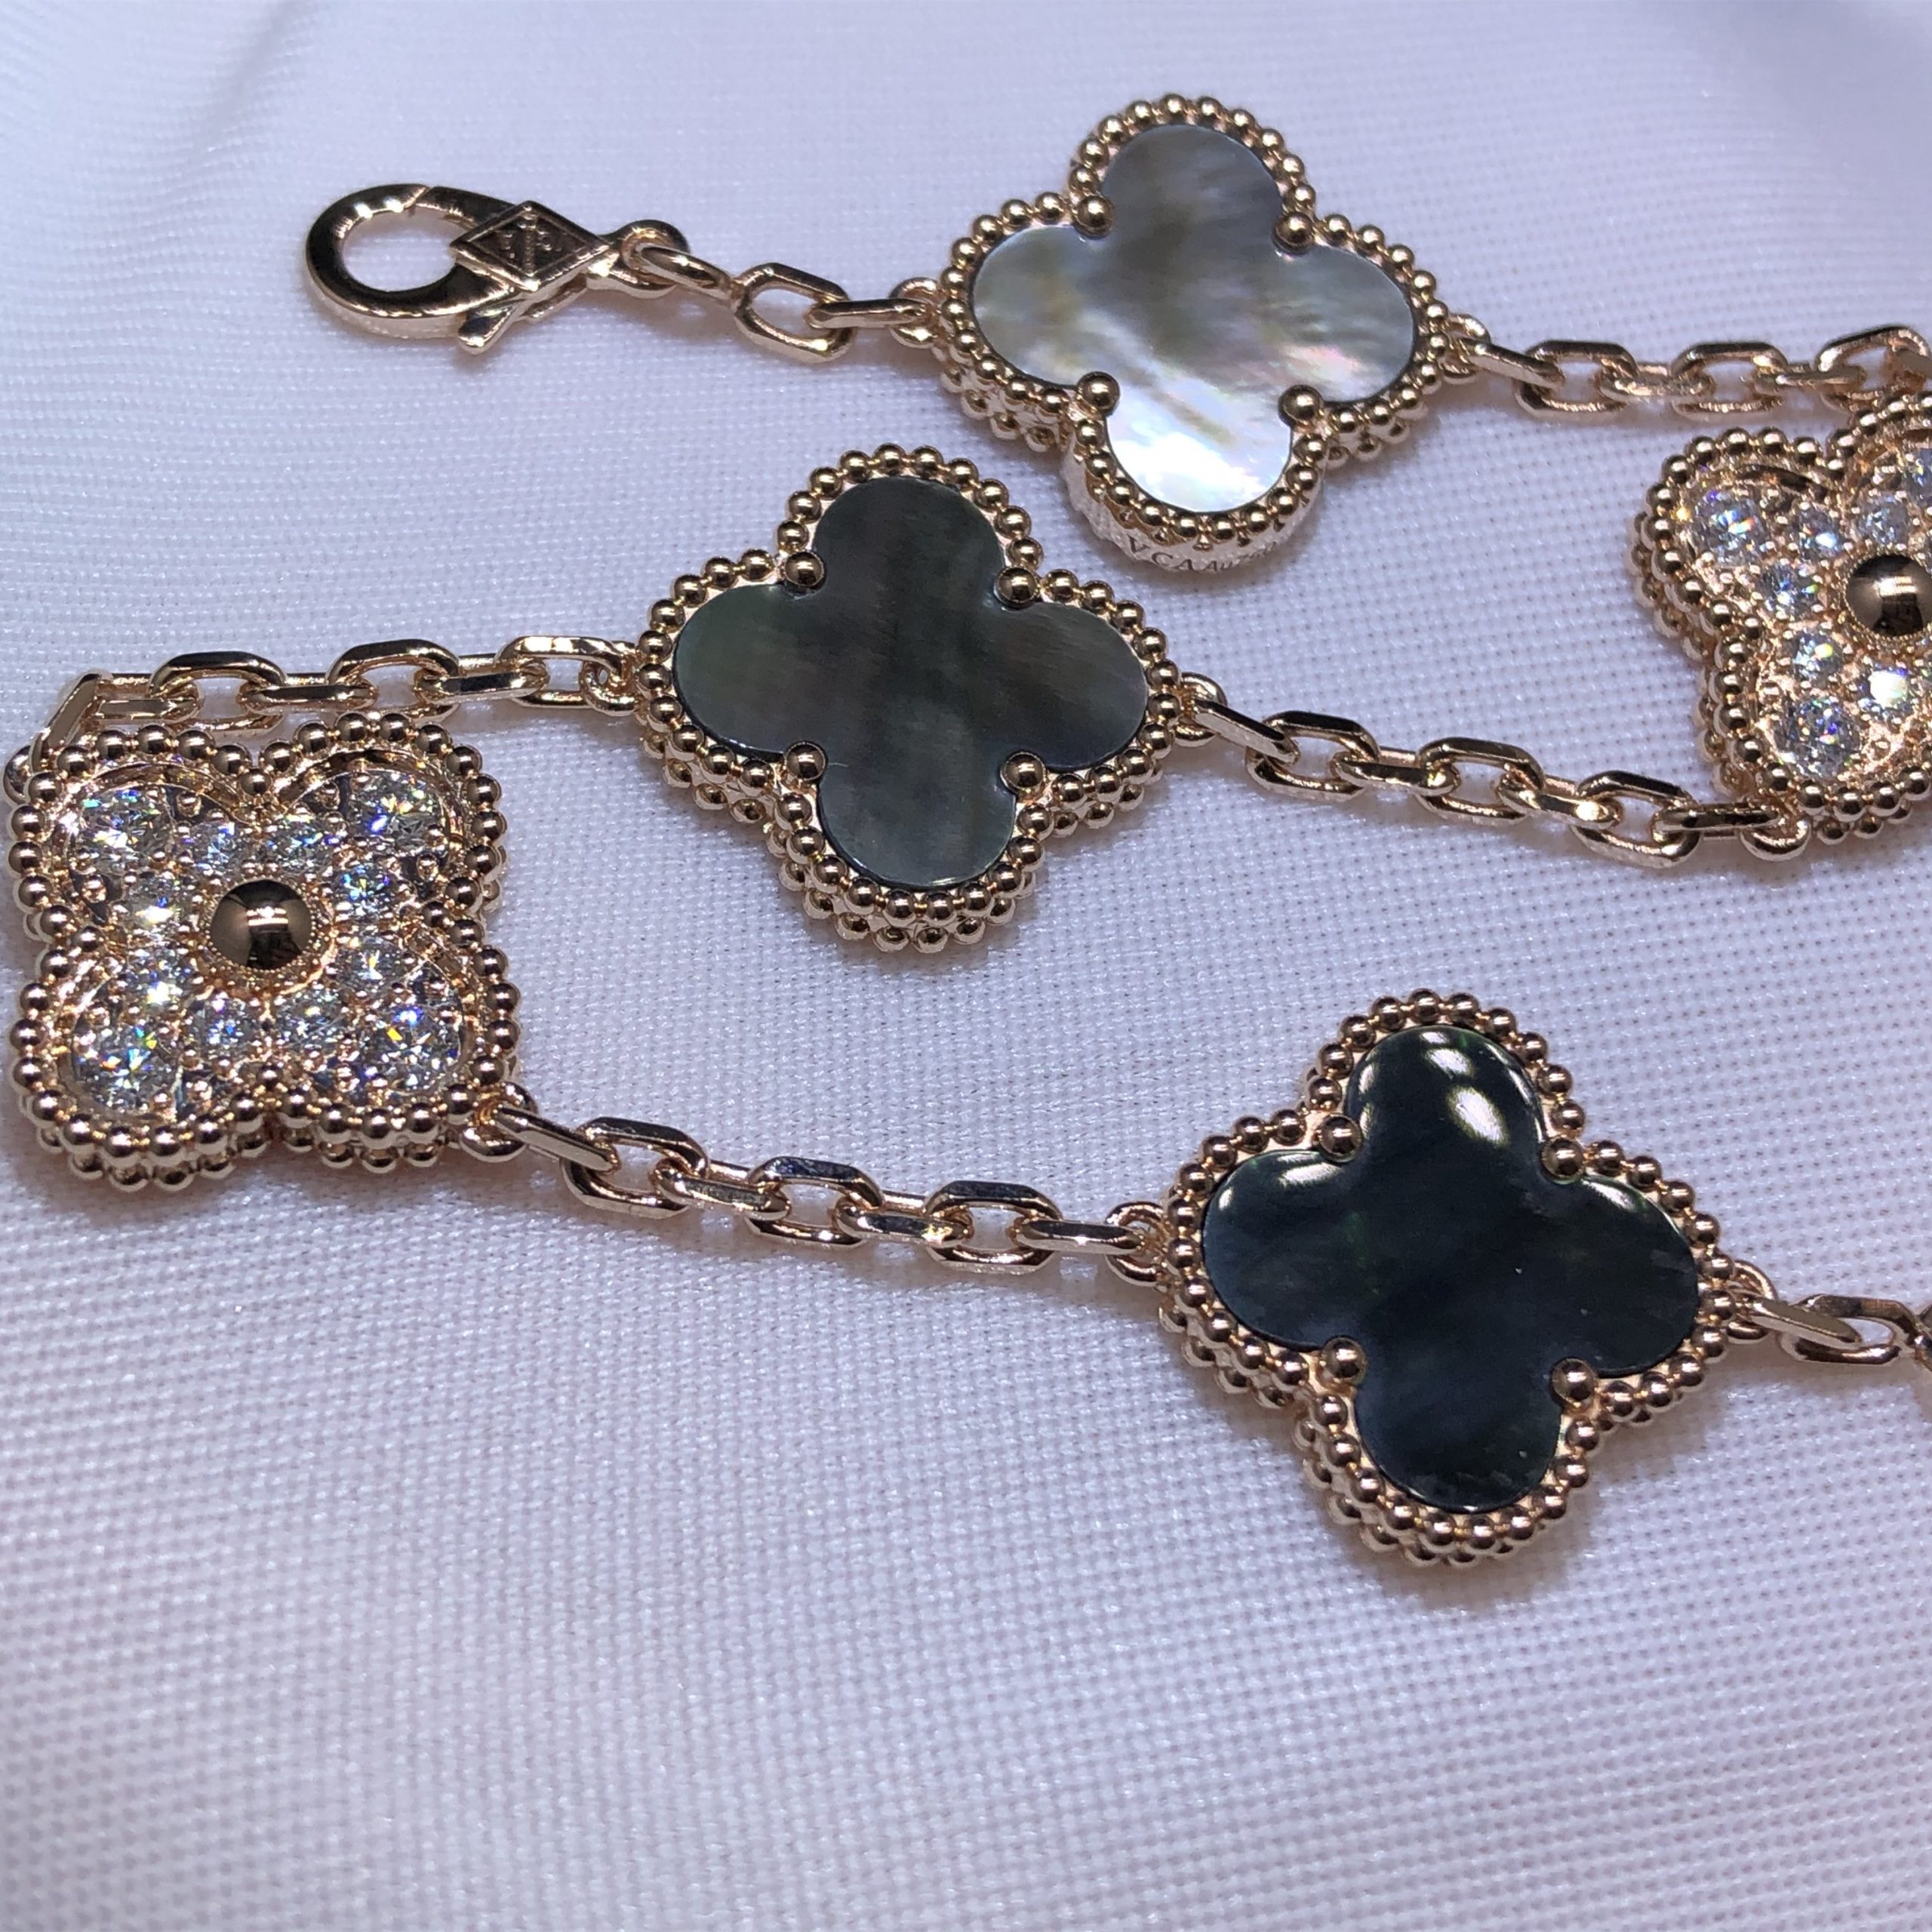 Custom Made Van Cleef & Arpels Vintage Alhambra 5 Motifs Bracelet in 18K Rose Gold, Gray Mother-of-pearl and Round diamonds